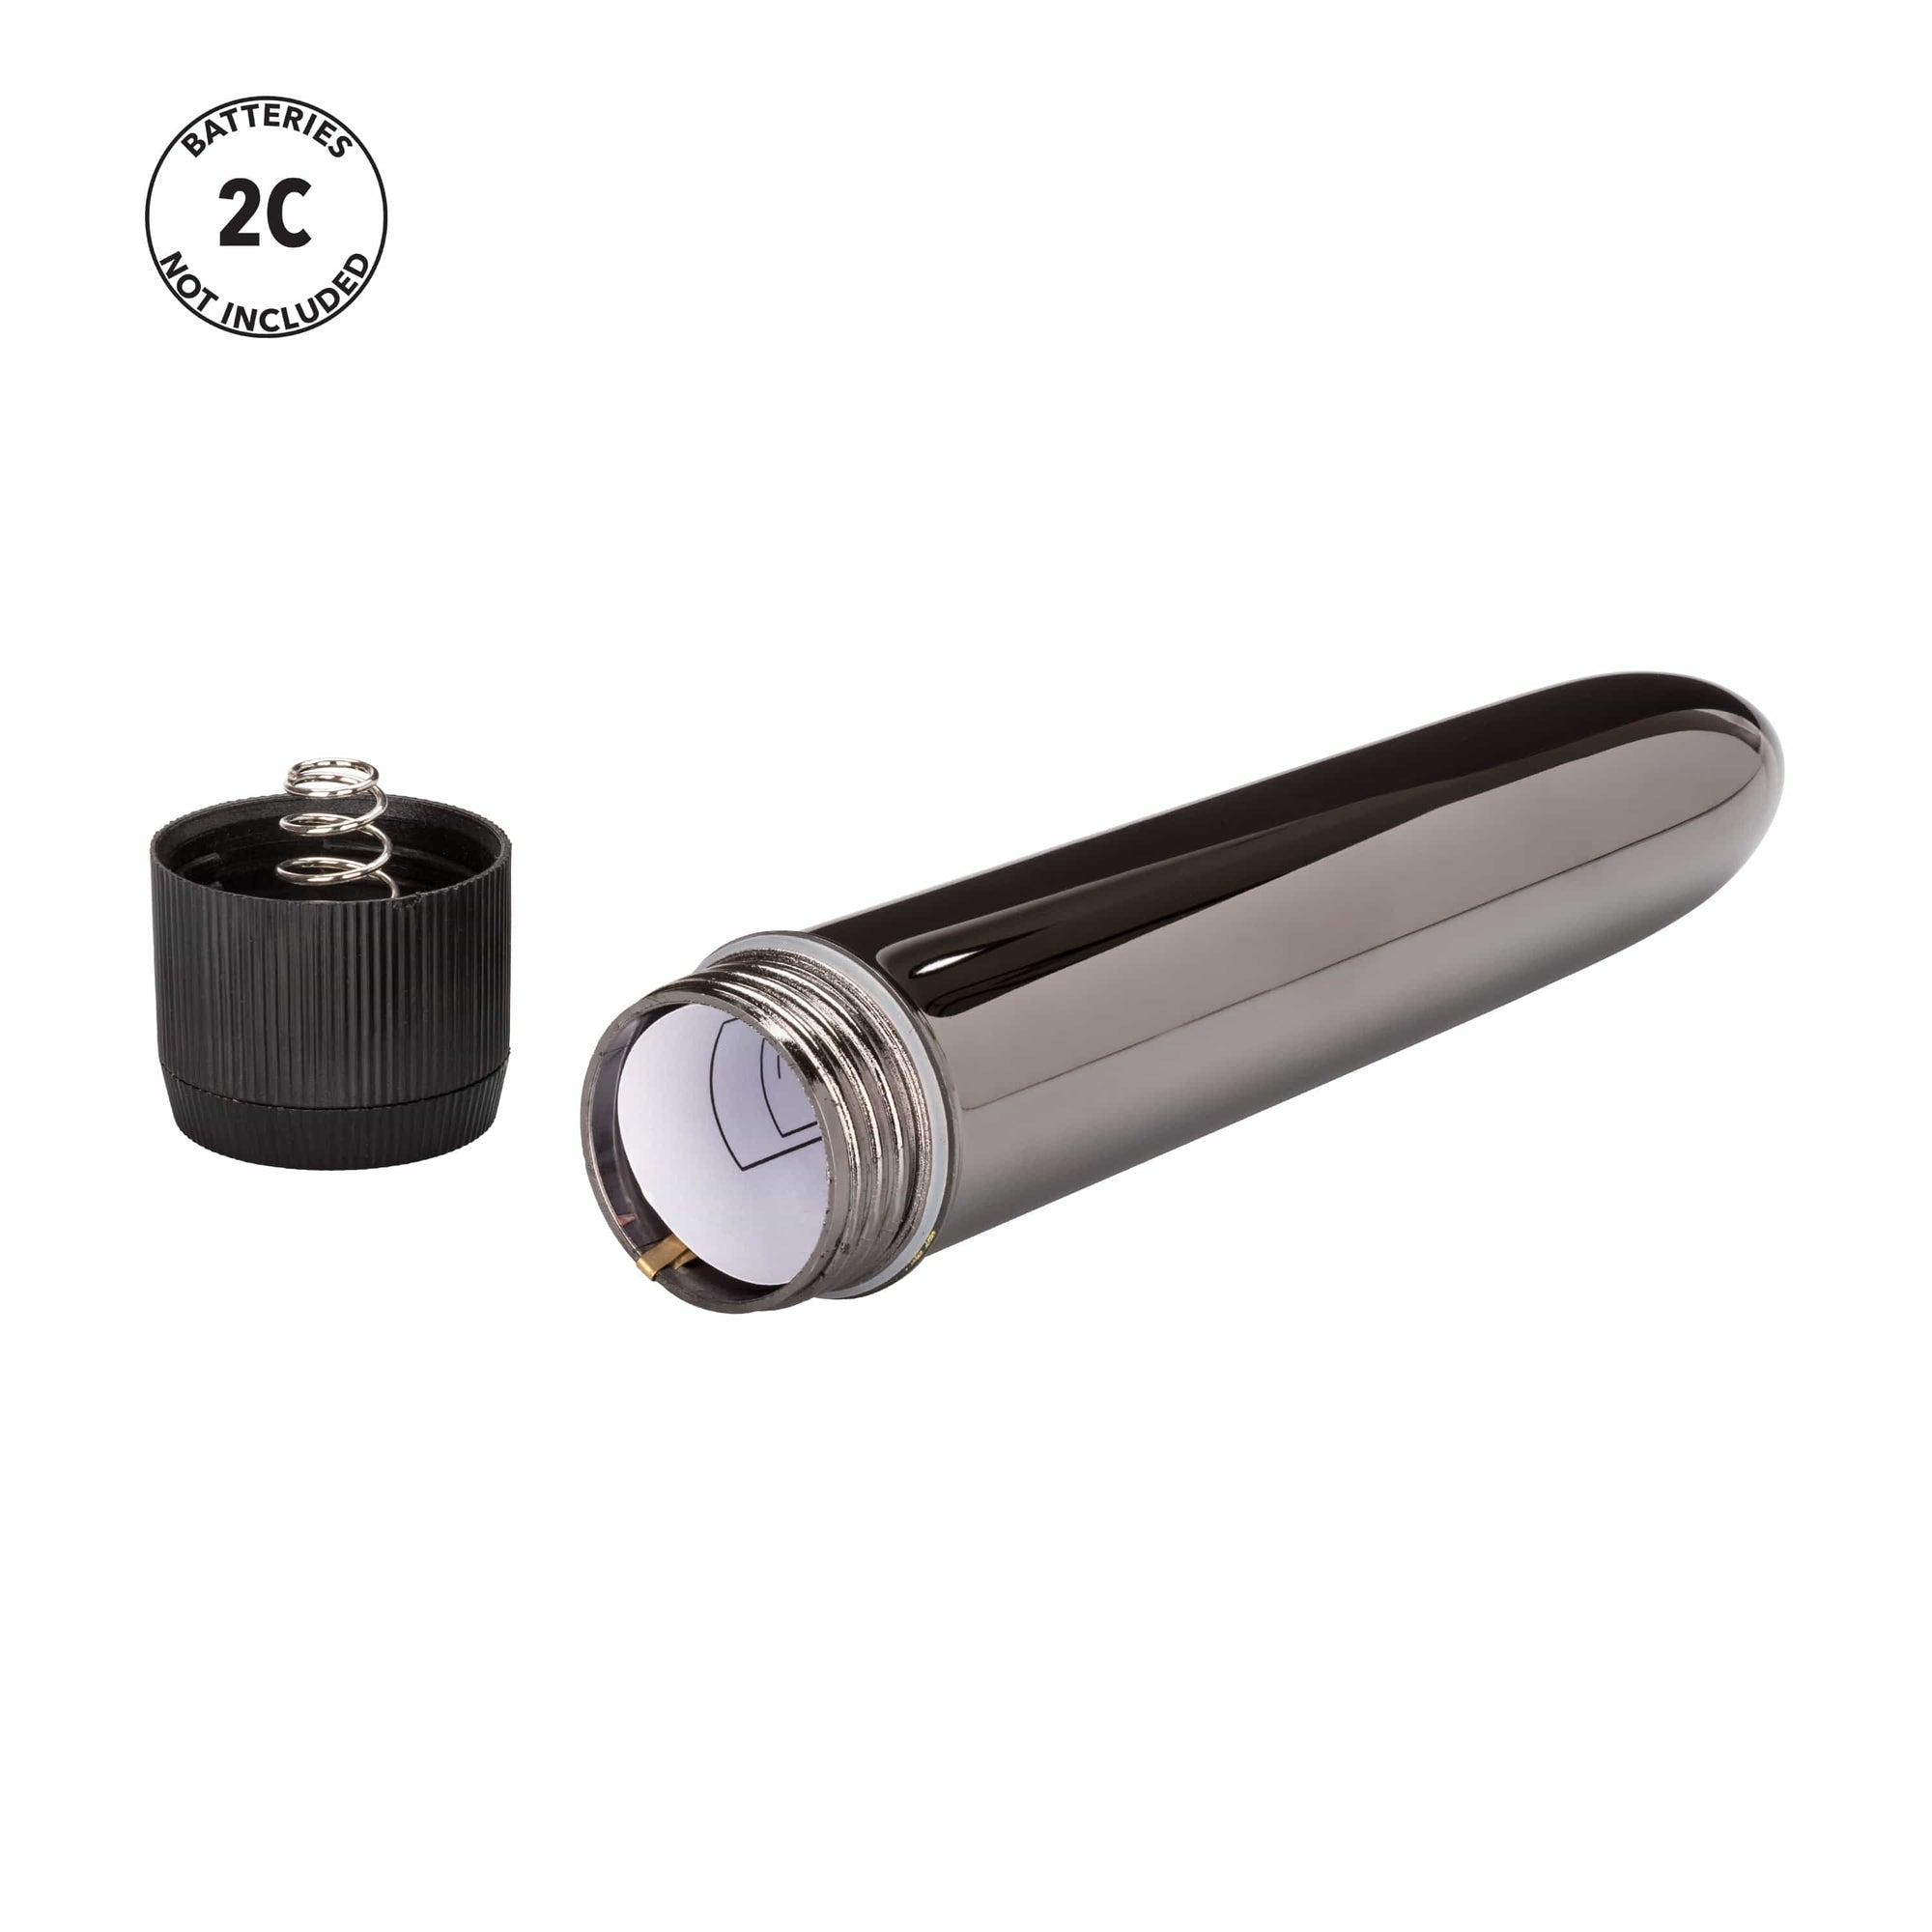 California Exotics - COLT Metal Rod Vibrator 7" (Silver) Non Realistic Dildo w/o suction cup (Vibration) Non Rechargeable 716770042972 CherryAffairs